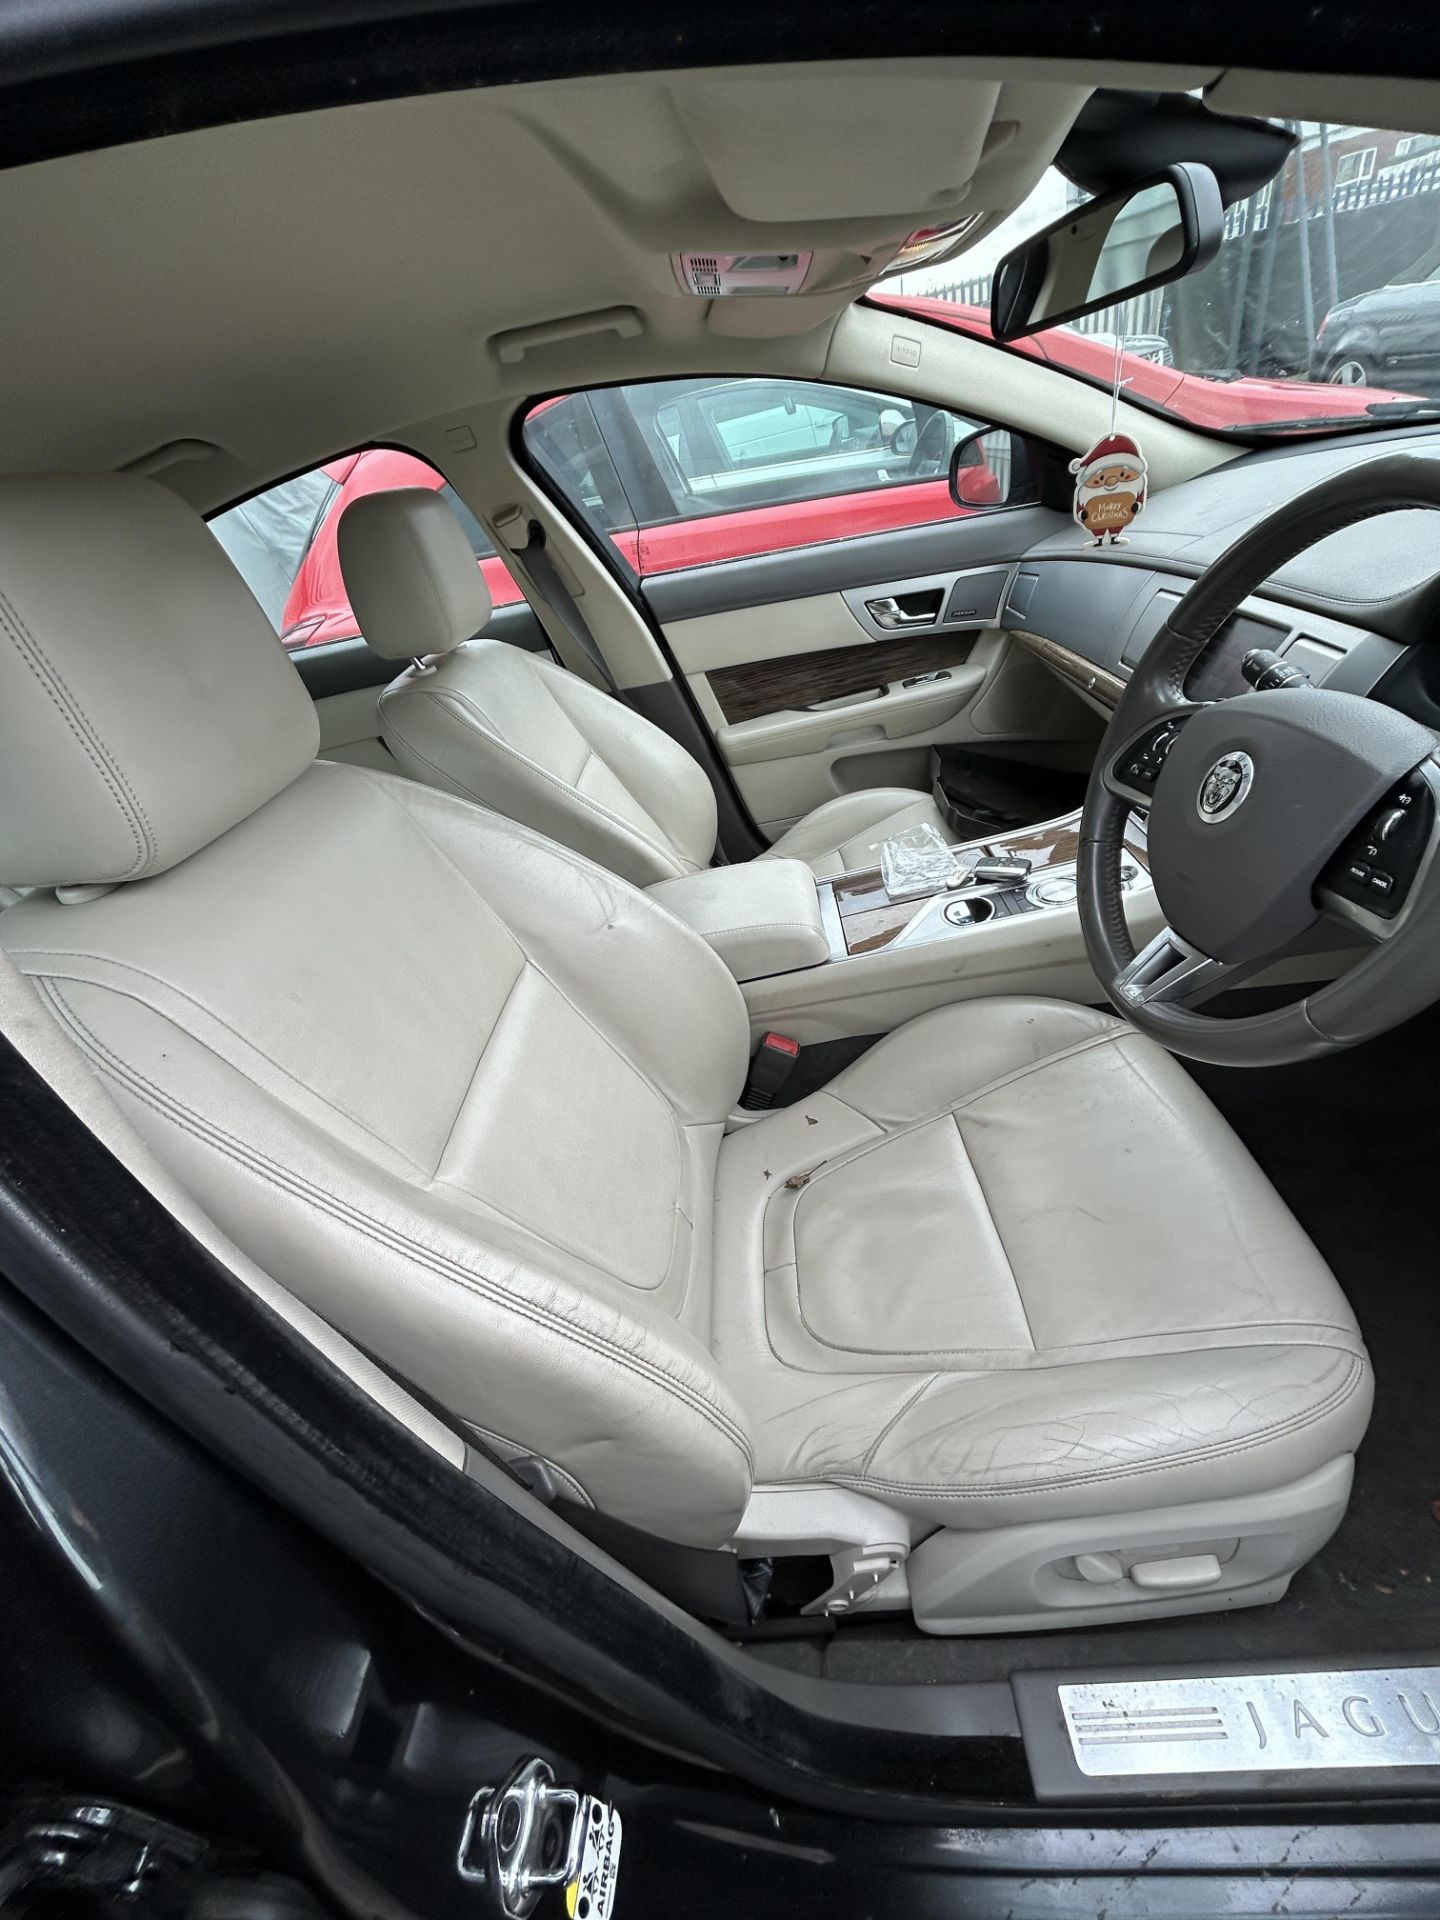 Jaguar XF Premium Luxury D Auto Diesel 4 Door Saloon | PO13 TOH | 165,697 Miles - Bild 5 aus 9